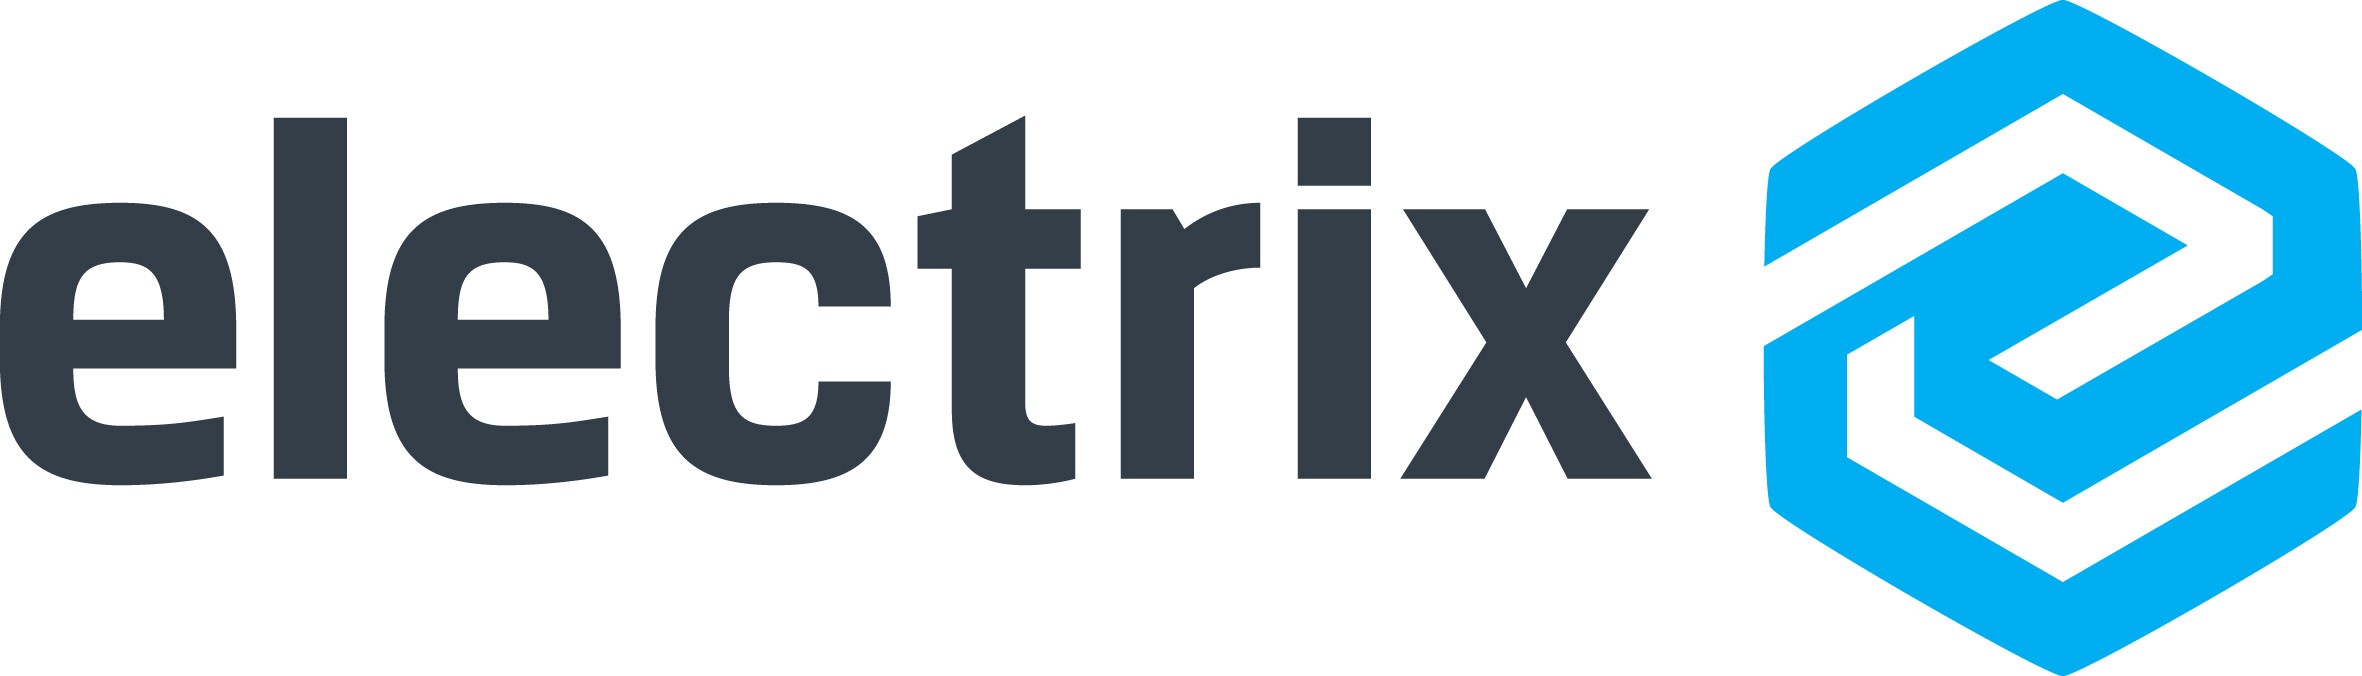 Electrix - Safer Power